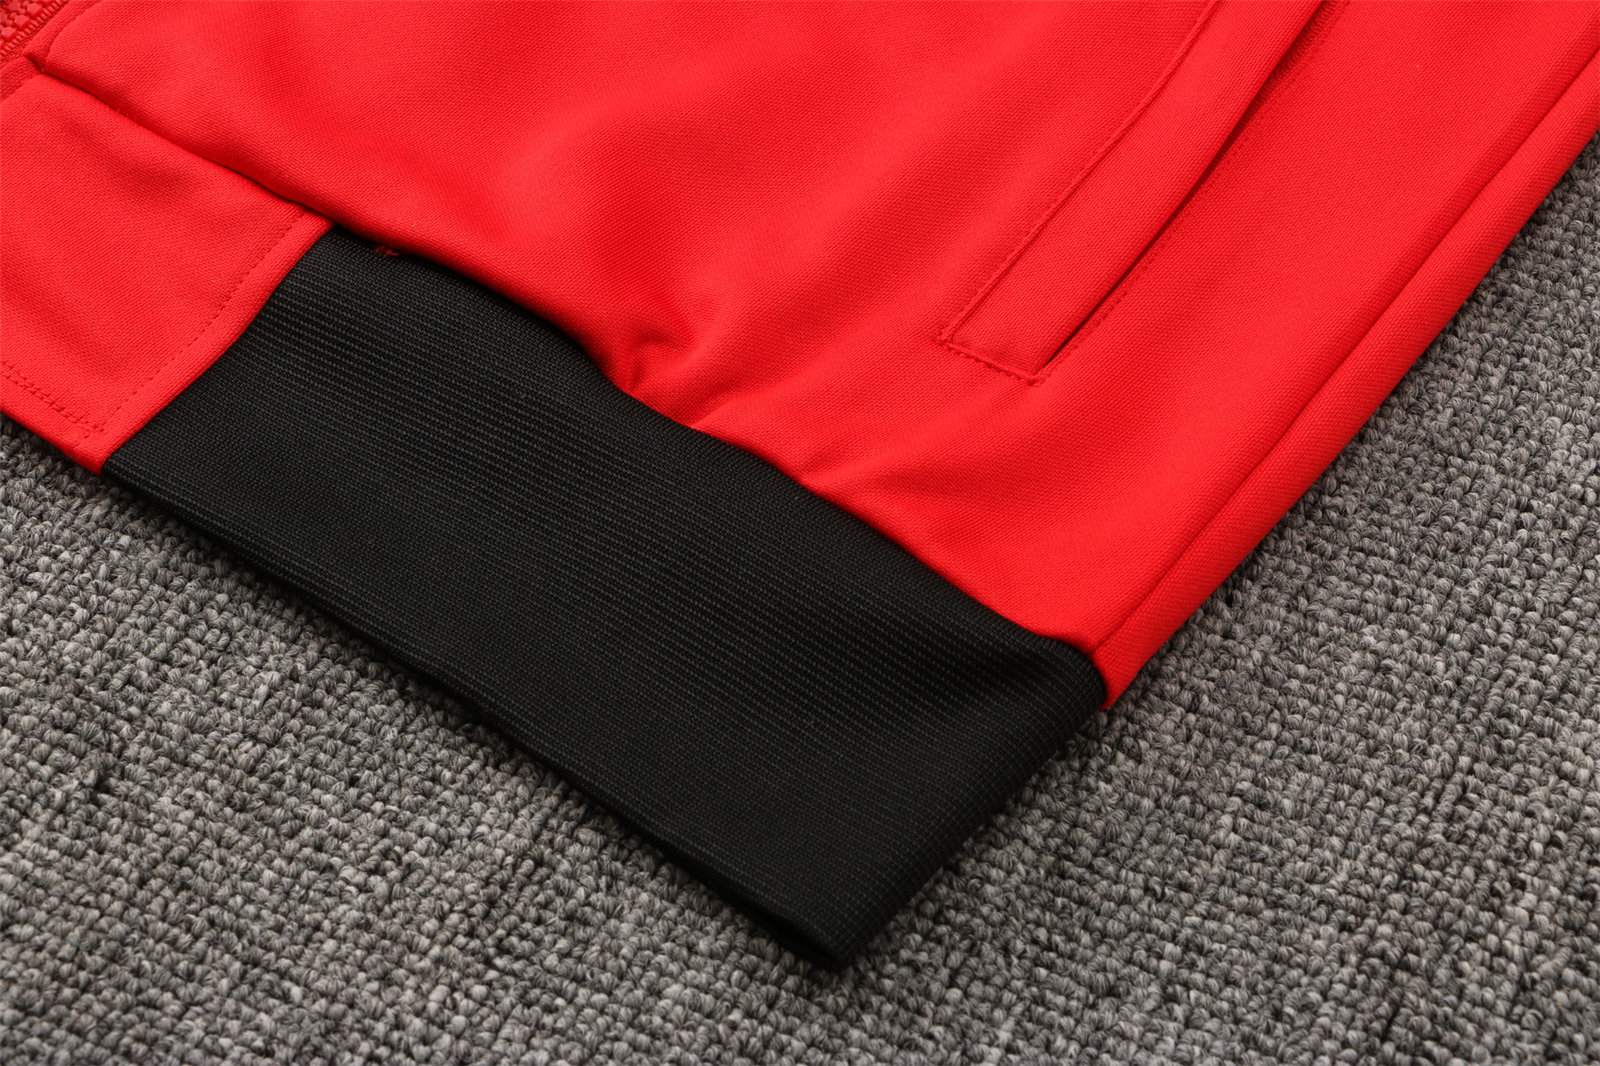 Manchester United Soccer Training Suit Jacket + Pants Red - Black Mens 2021/22